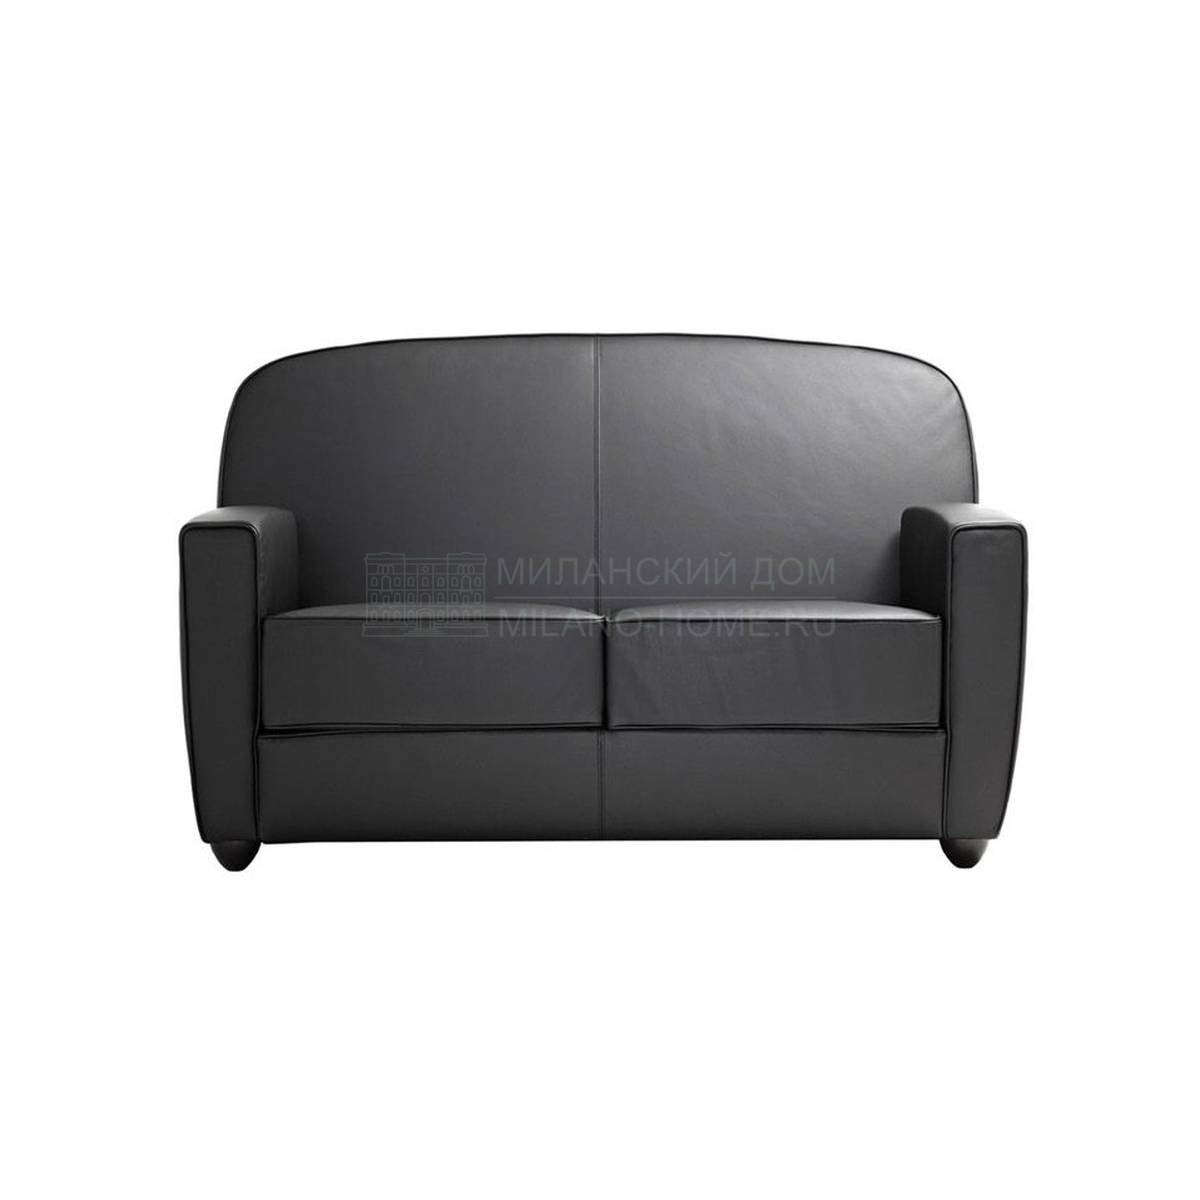 Прямой диван Vigilius sofa leather из Италии фабрики DRIADE